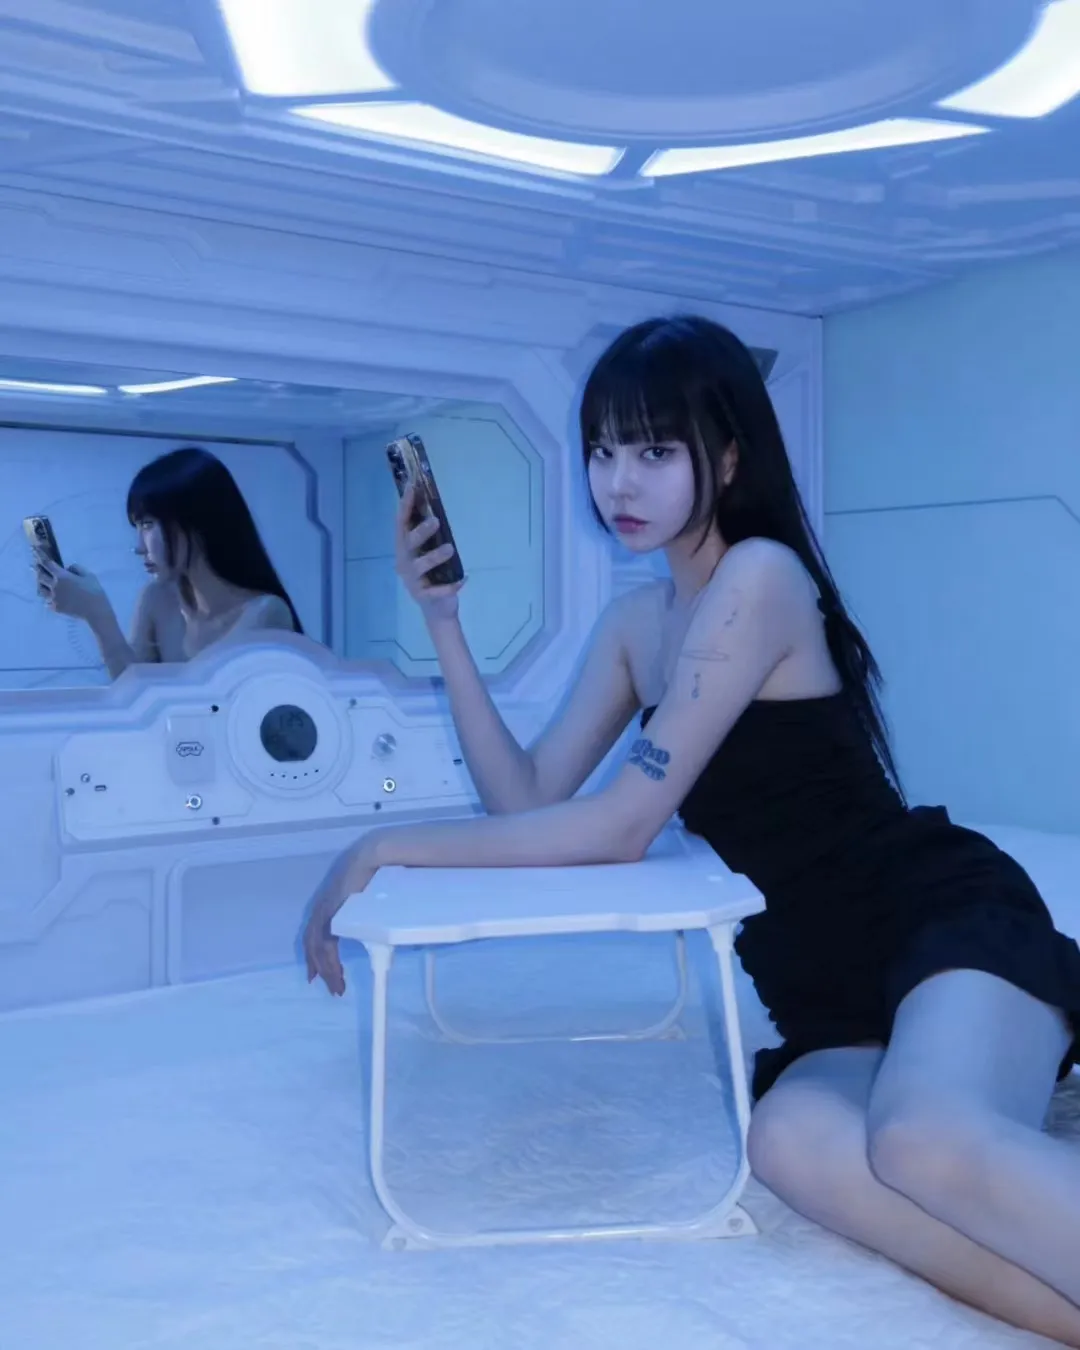 Capsule Bed Bedroom Japanese ABS Modern Luxury Hotel Furniture Size Bedroom Memory Foam Bed Mattress in a Box Kid Pods Bedroom